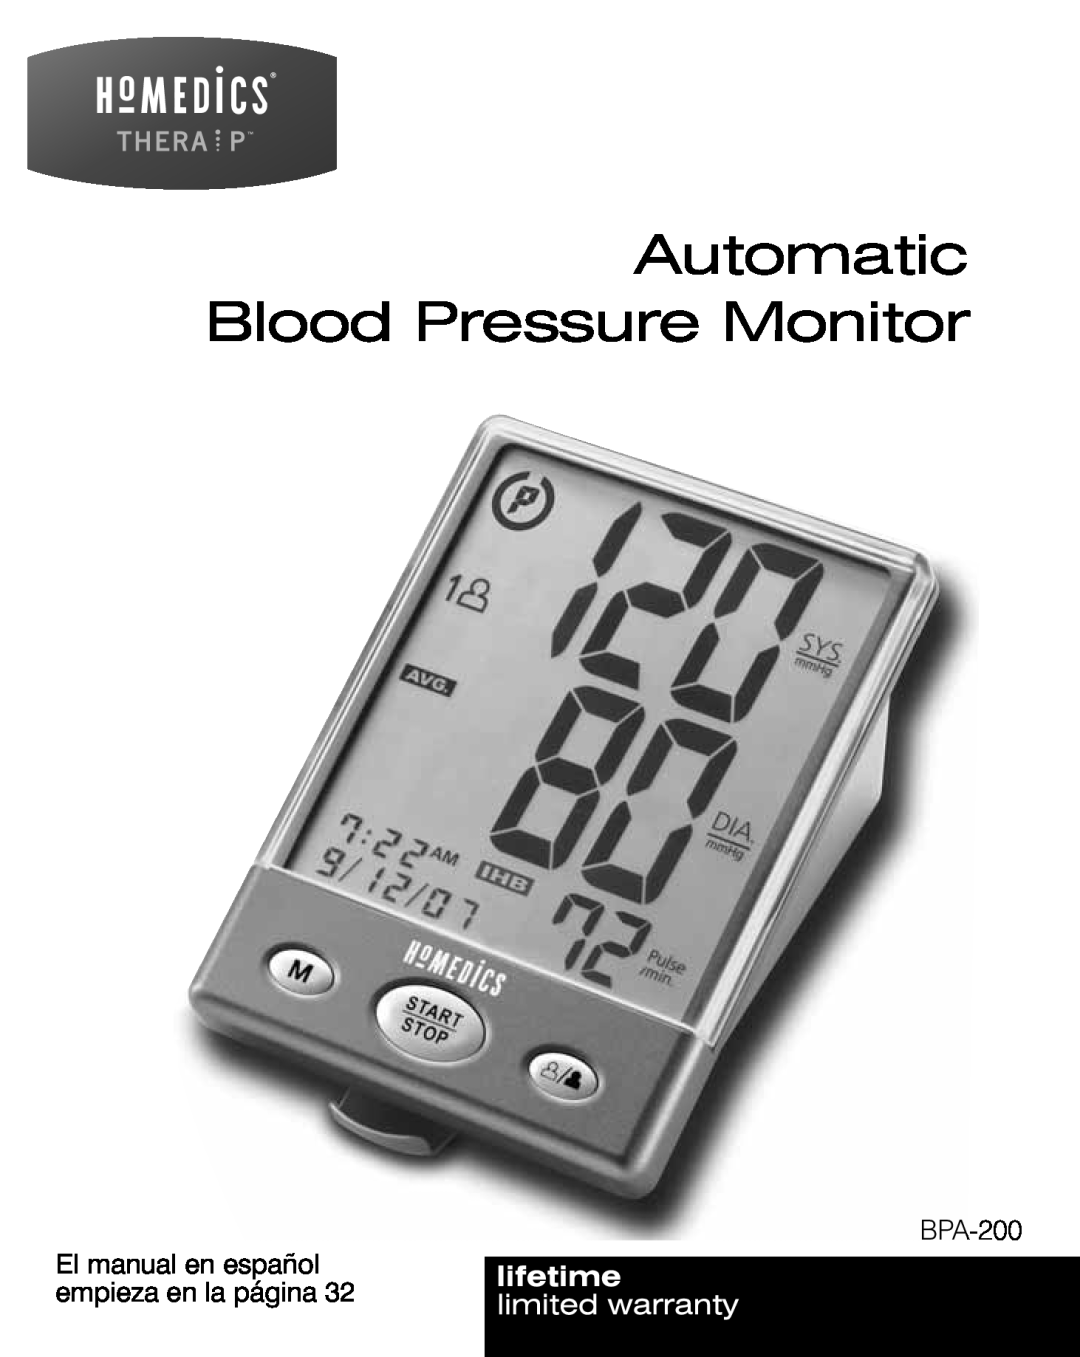 HoMedics manual Automatic Blood Pressure Monitor, BPA-200 El manual en español empieza en la página 